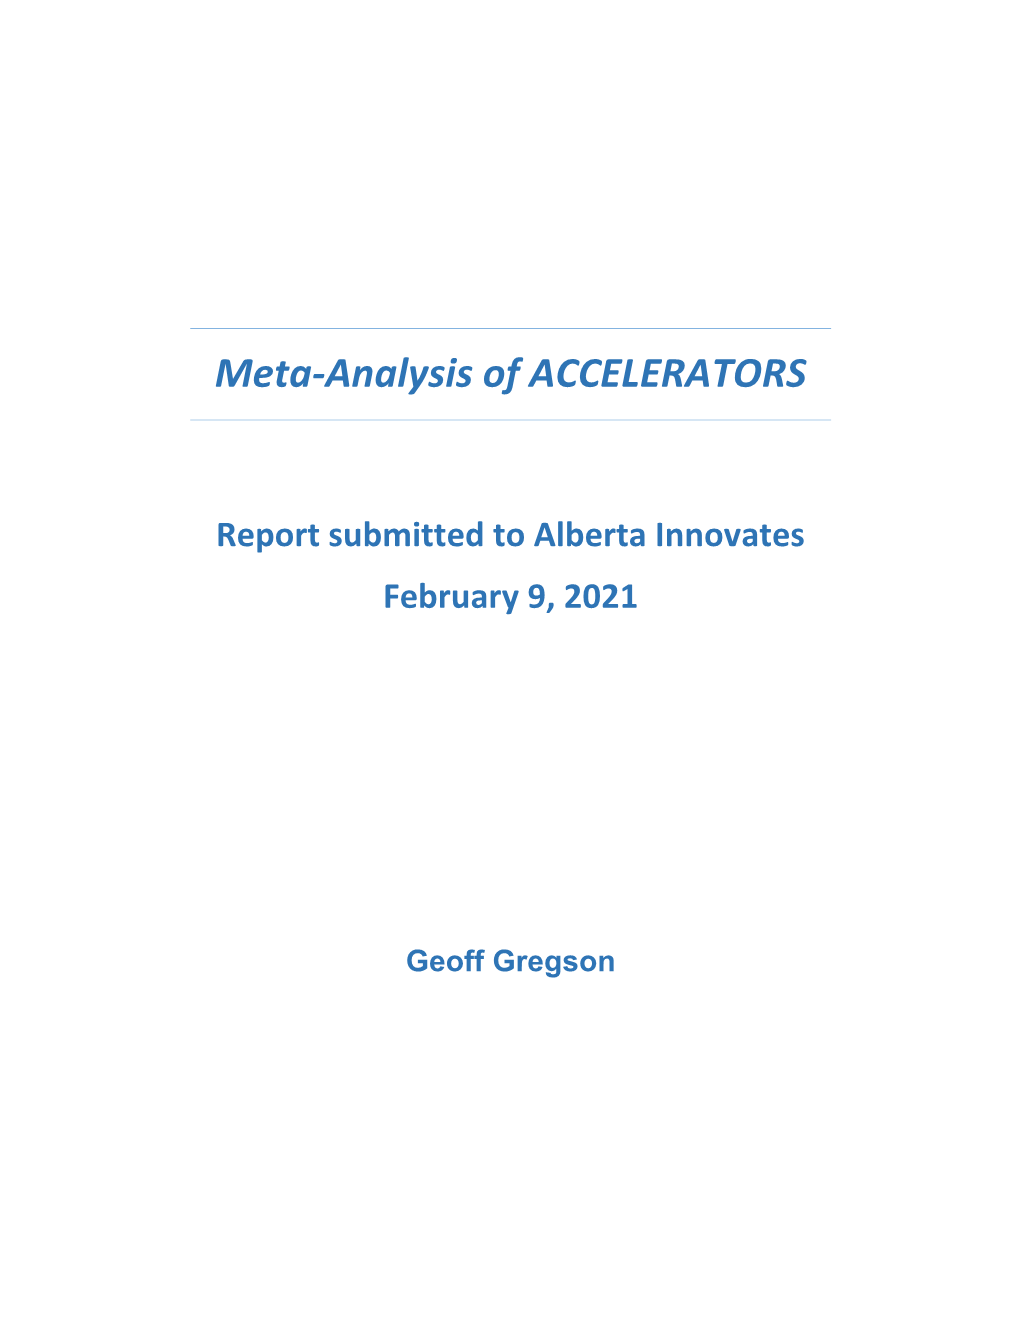 Alberta Innovates Meta-Analysis of Accelerators